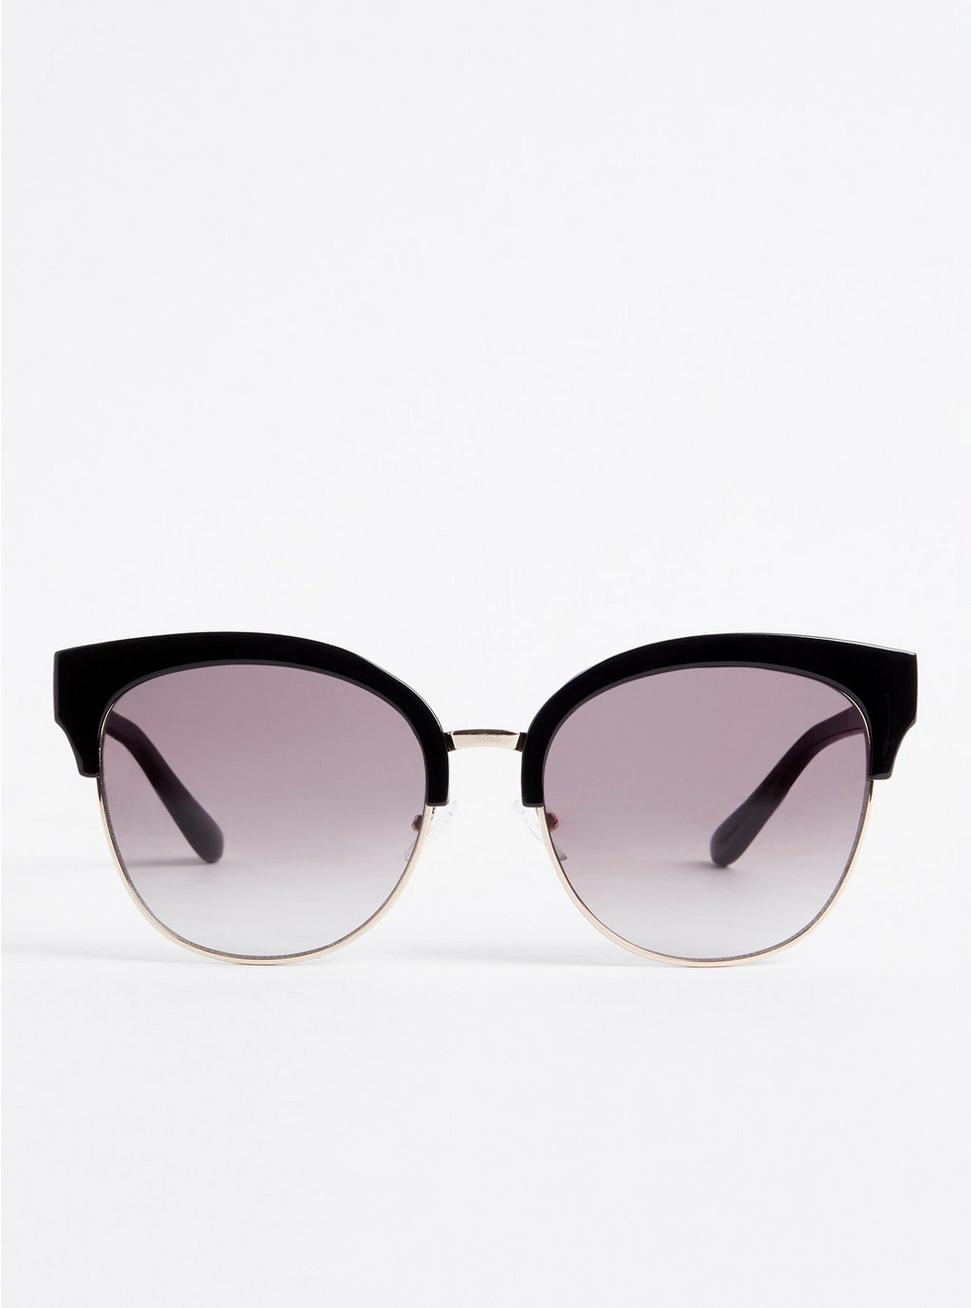 Retro Cat Eye Sunglasses - Black & Gold Tone, , hi-res